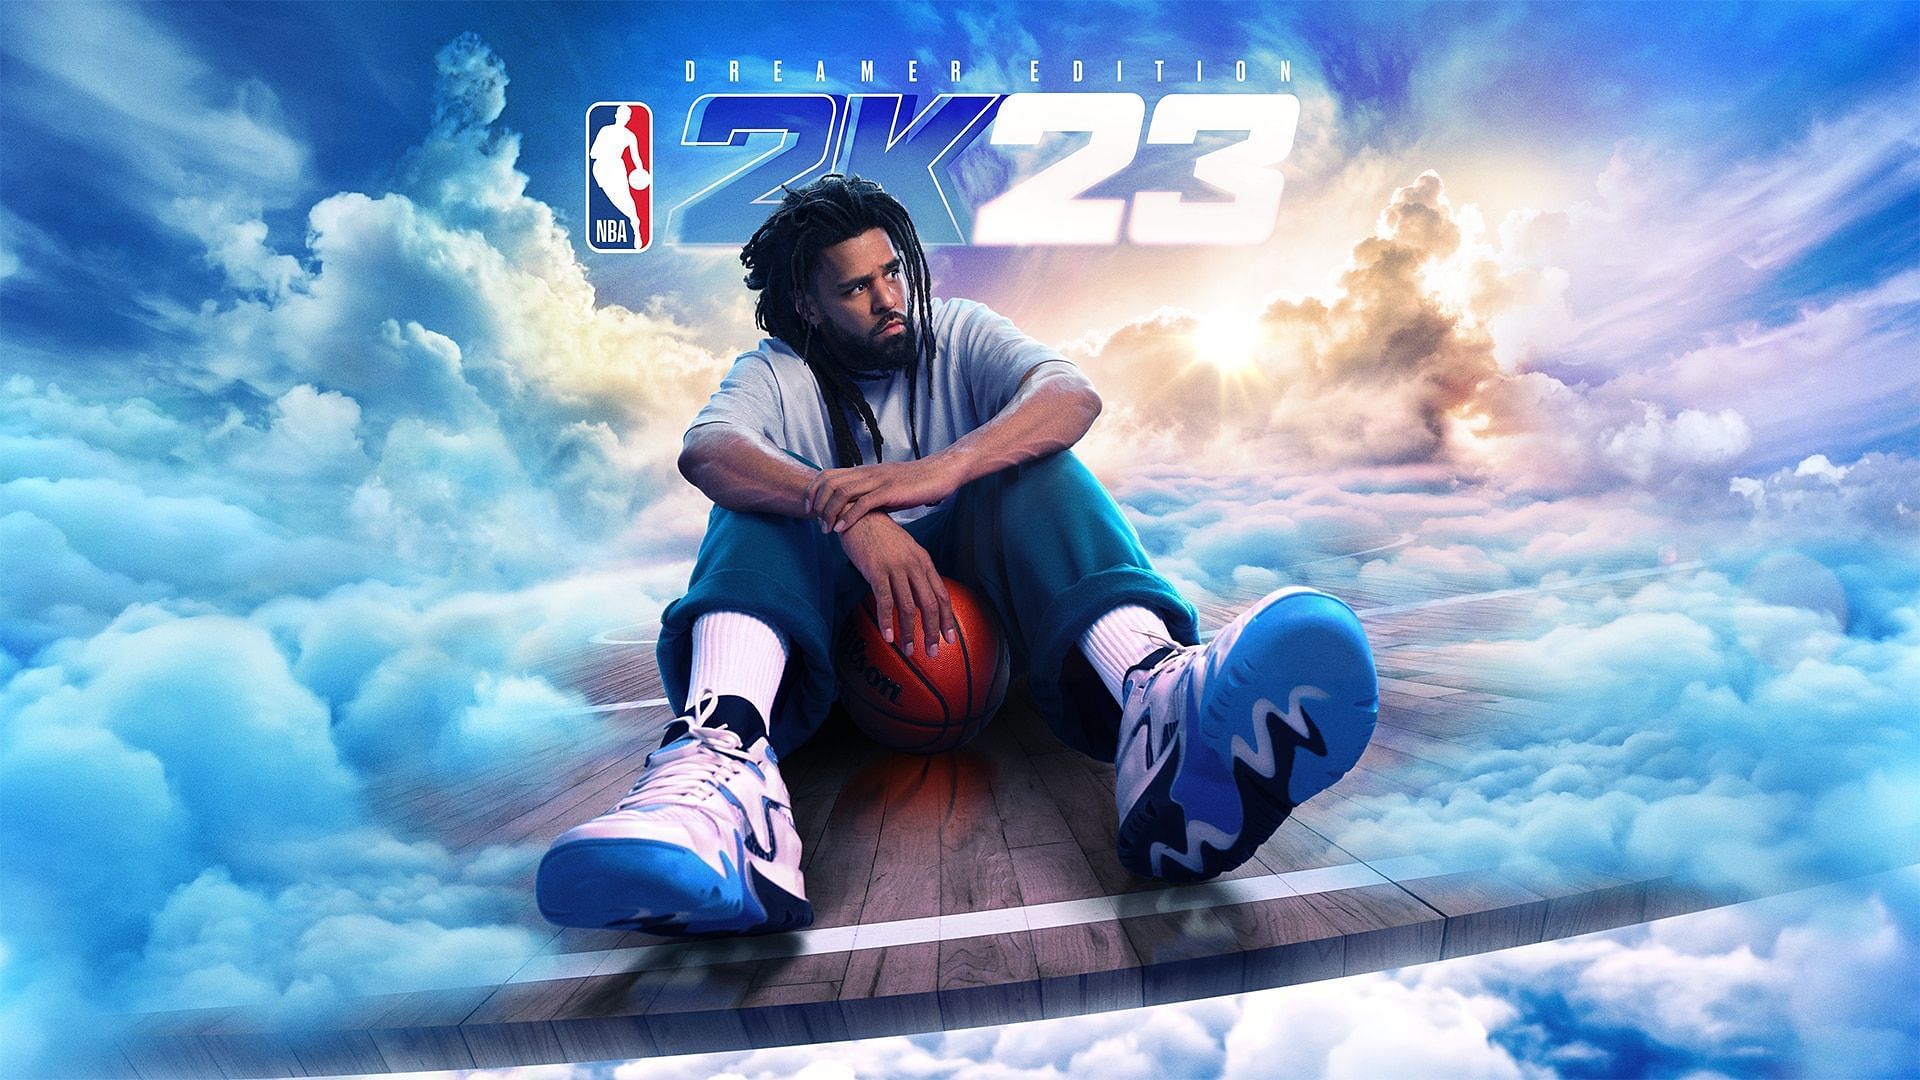 NBA 2K Dreamer Edition